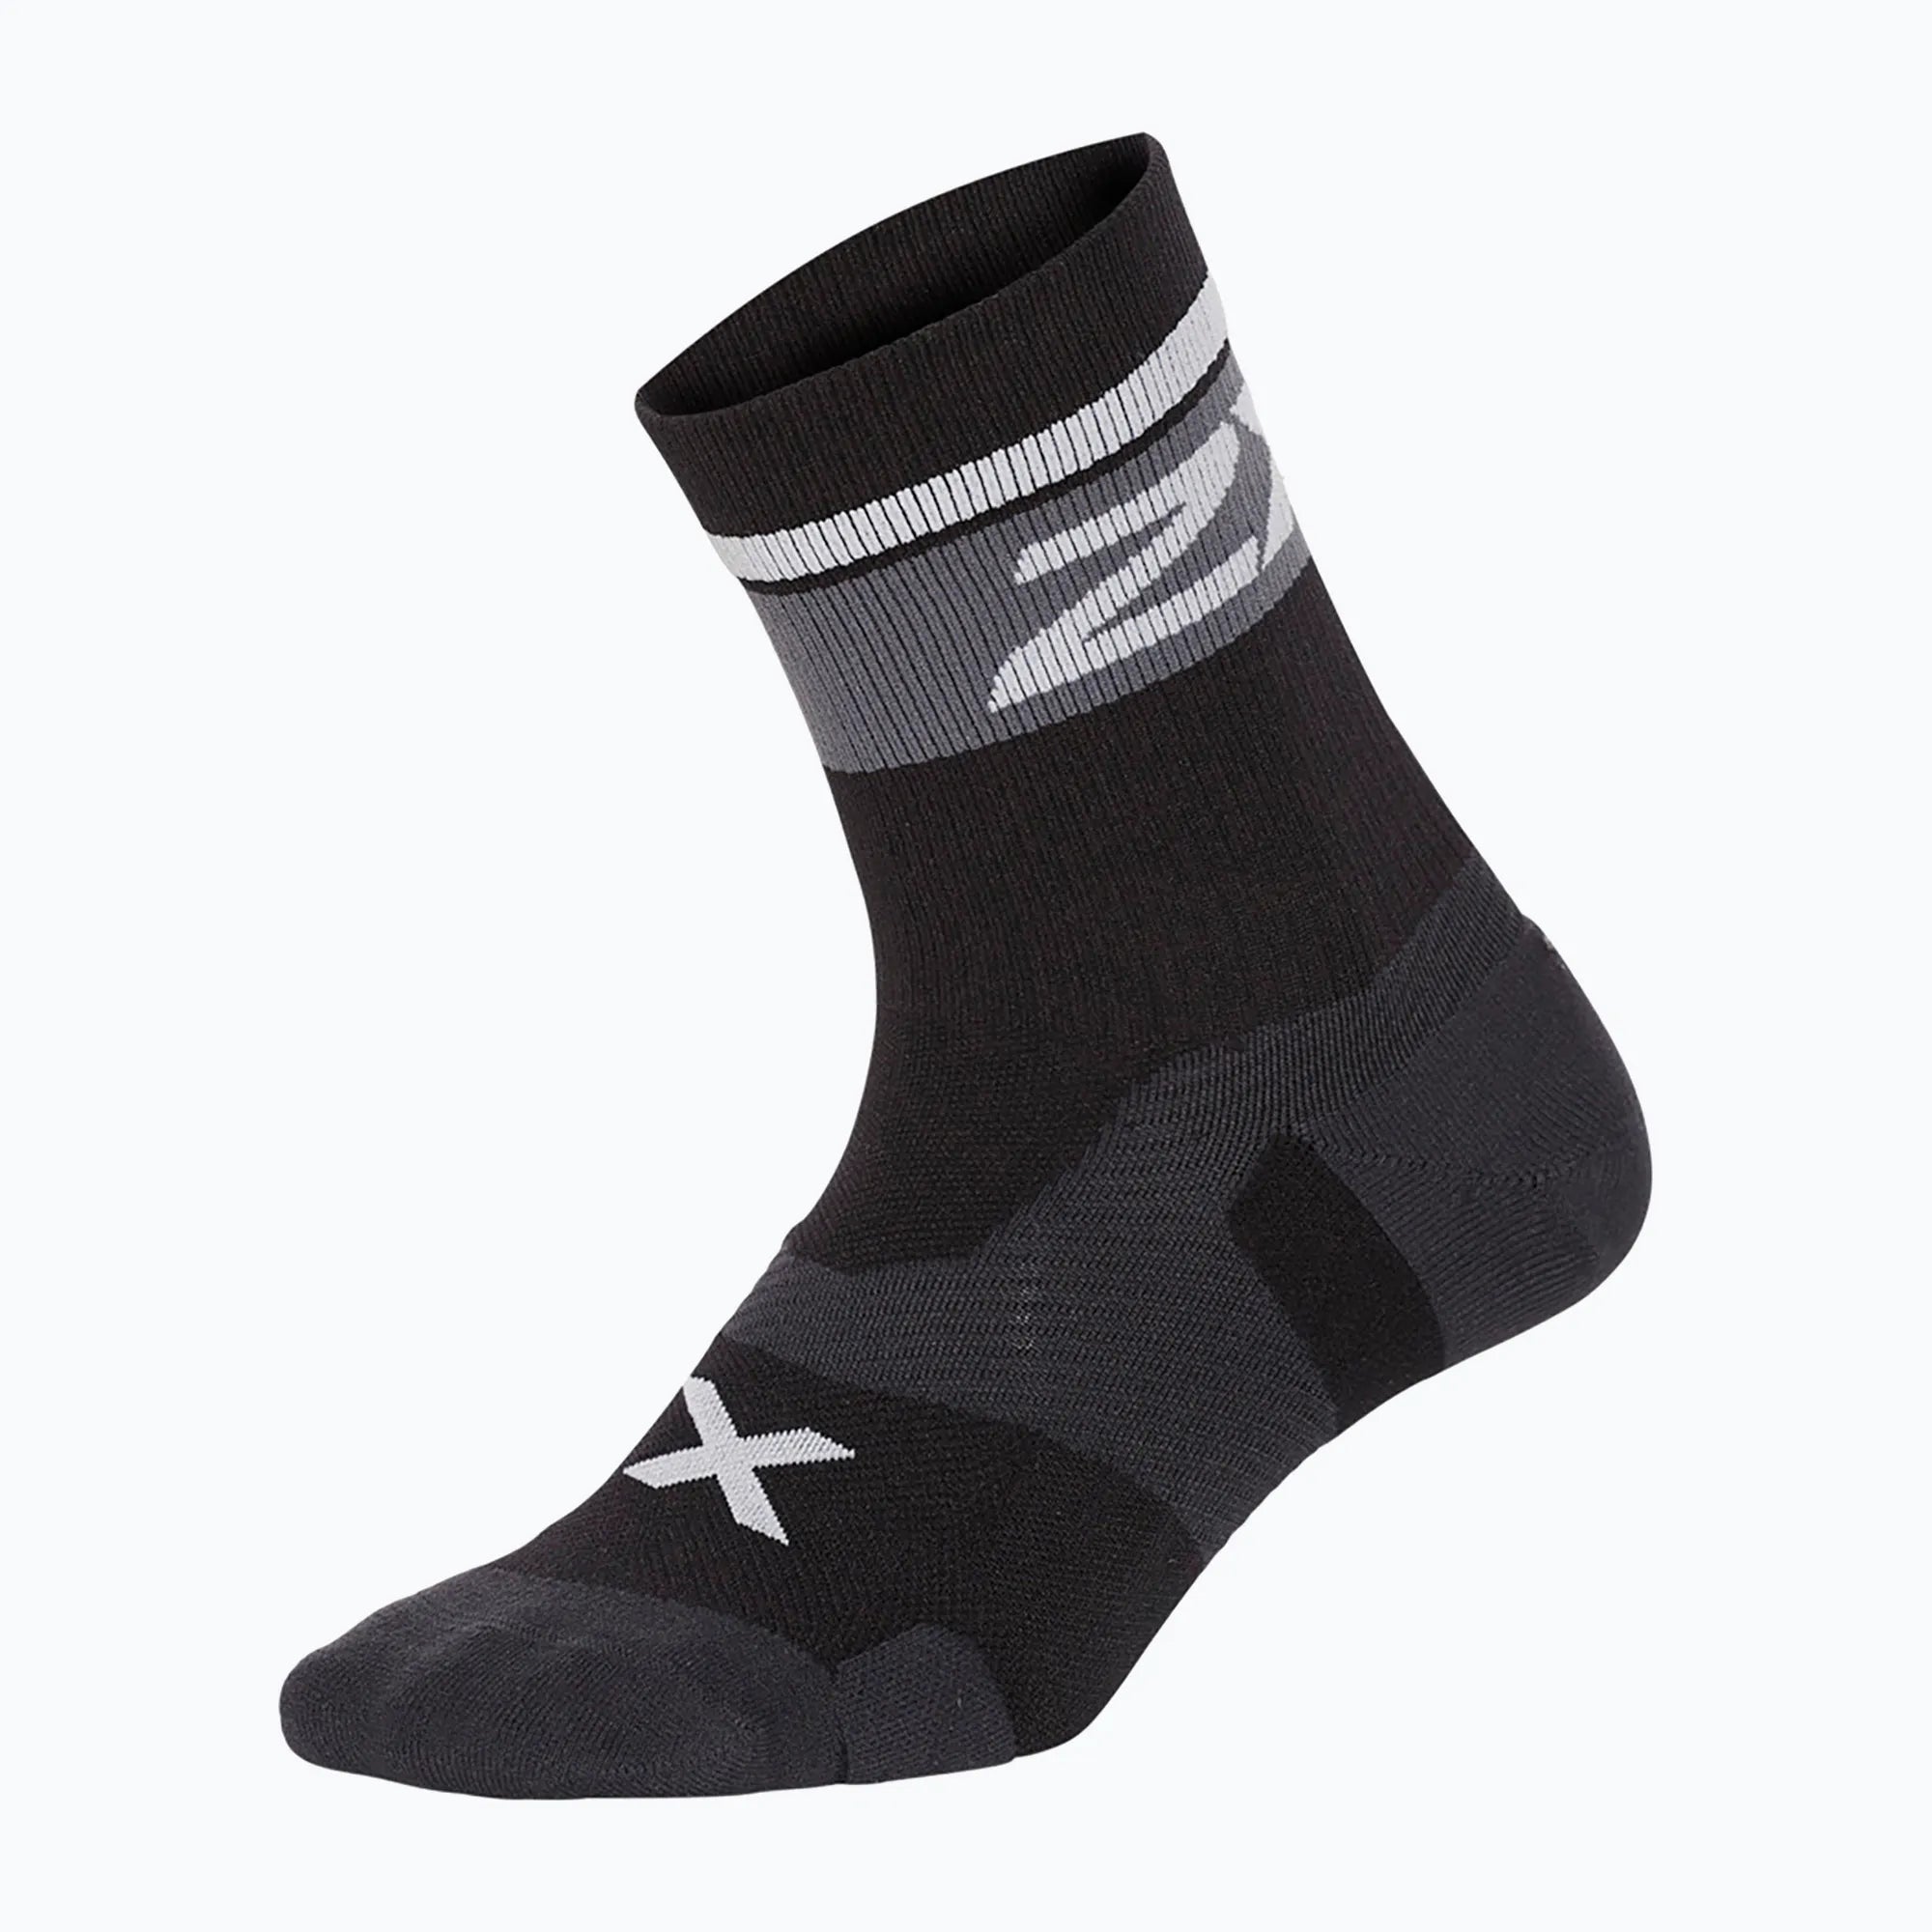 2XU VECTR Cushion Crew Socks, Black/White